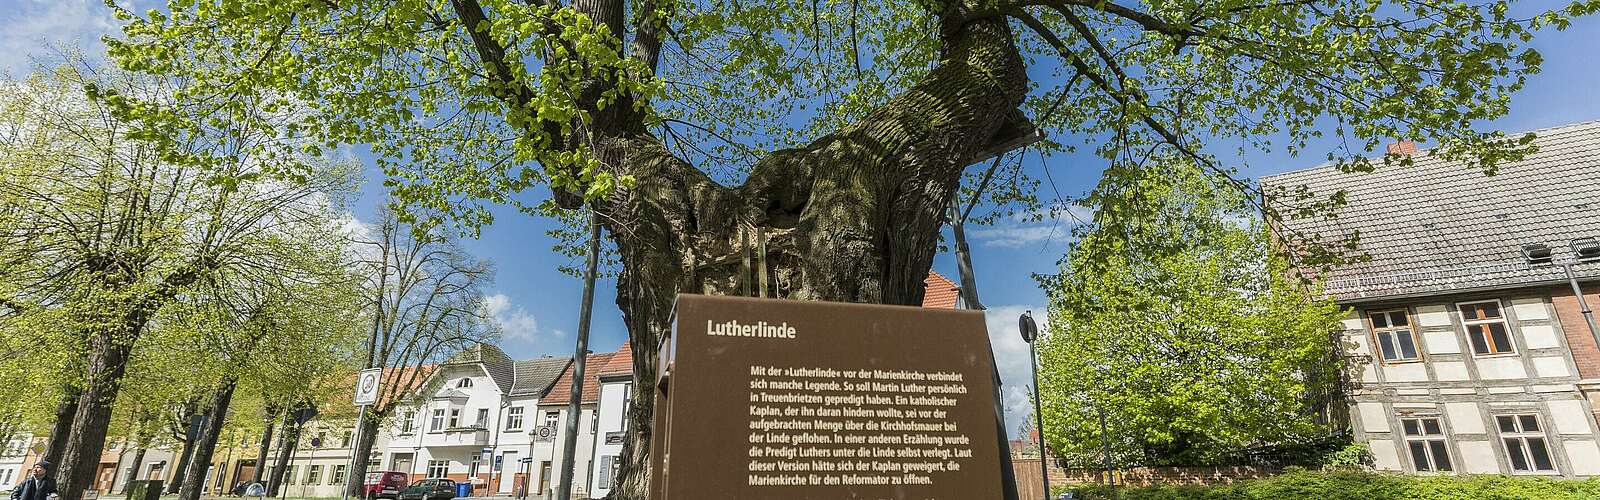 Lutherlinde in Treuenbrietzen,
        
    

        Foto: TMB-Fotoarchiv/Steffen Lehmann